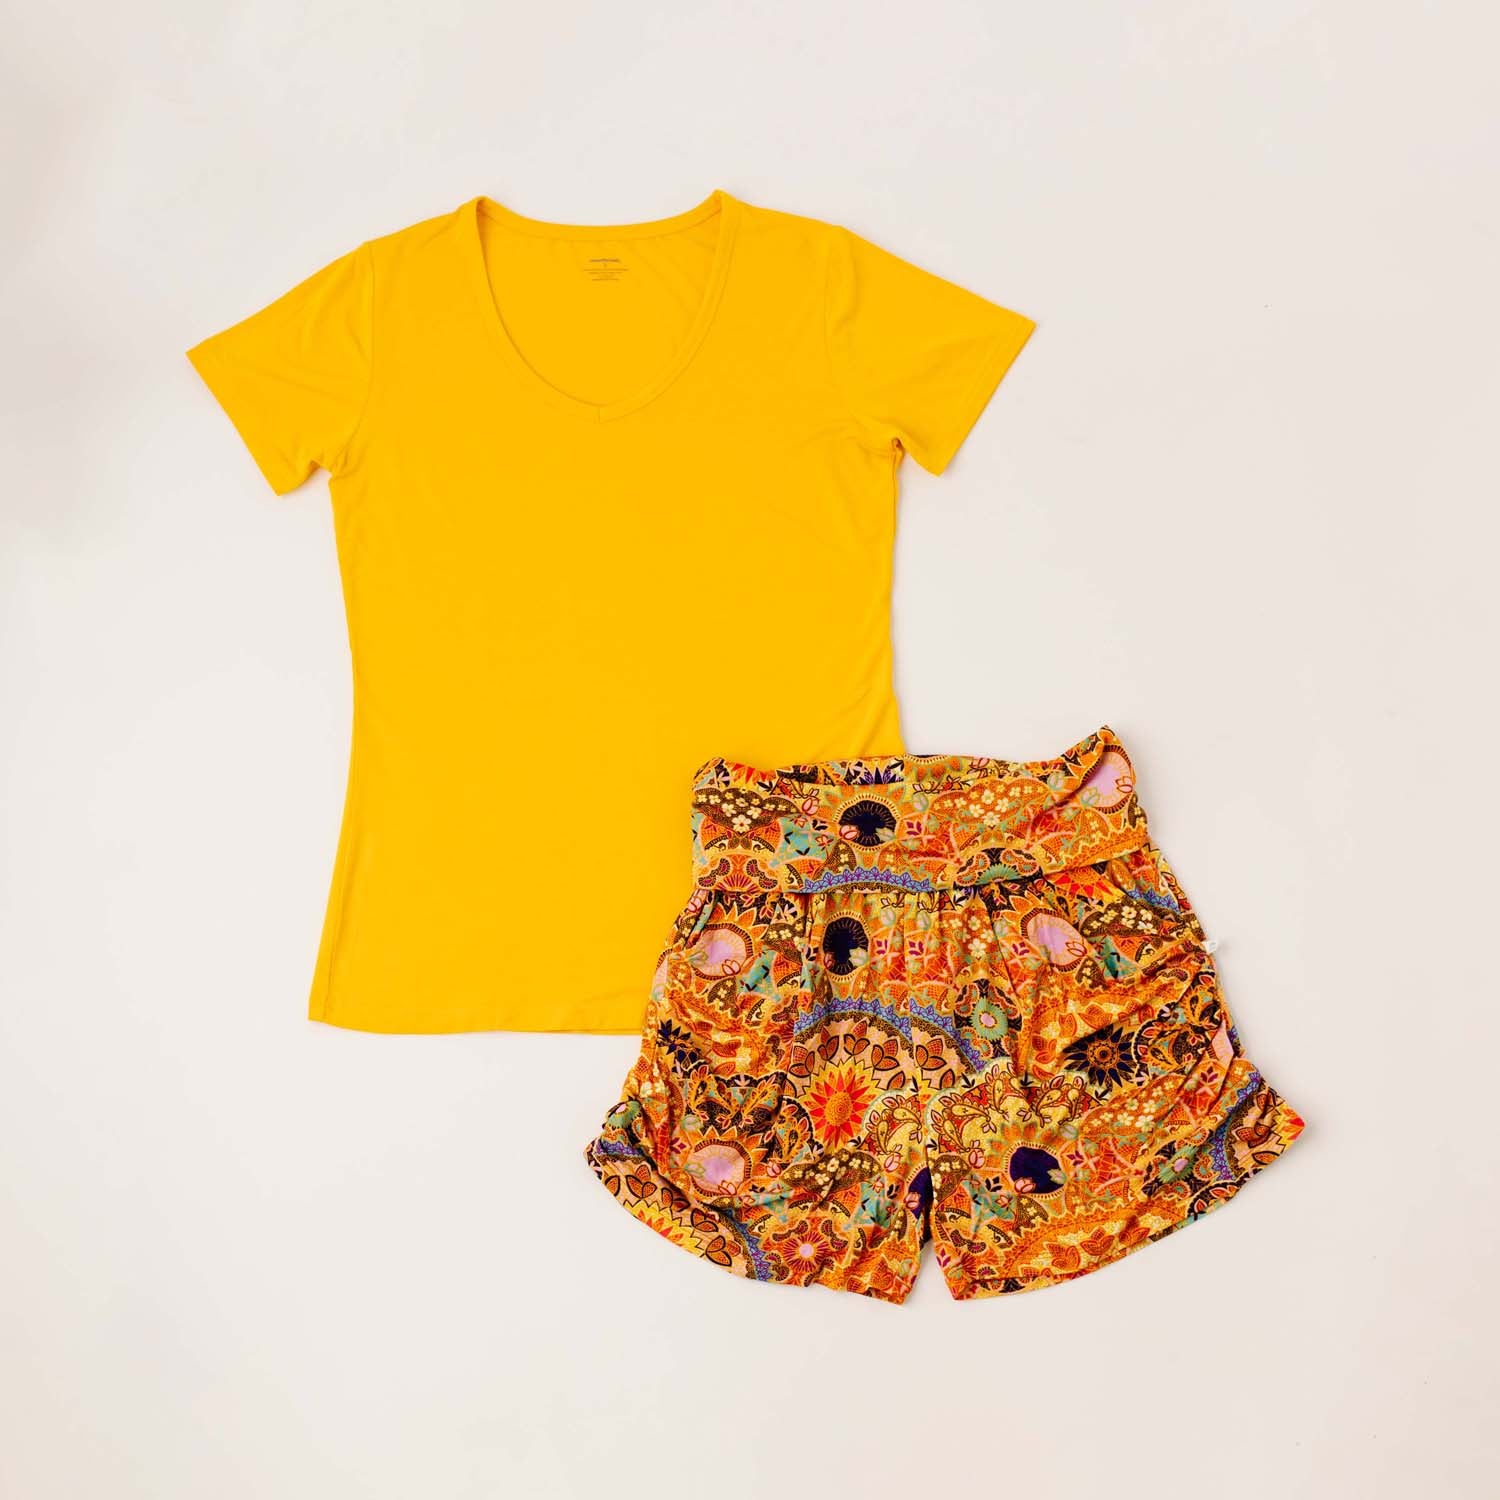 Sunshine Mandala Women's Lounge Shorts